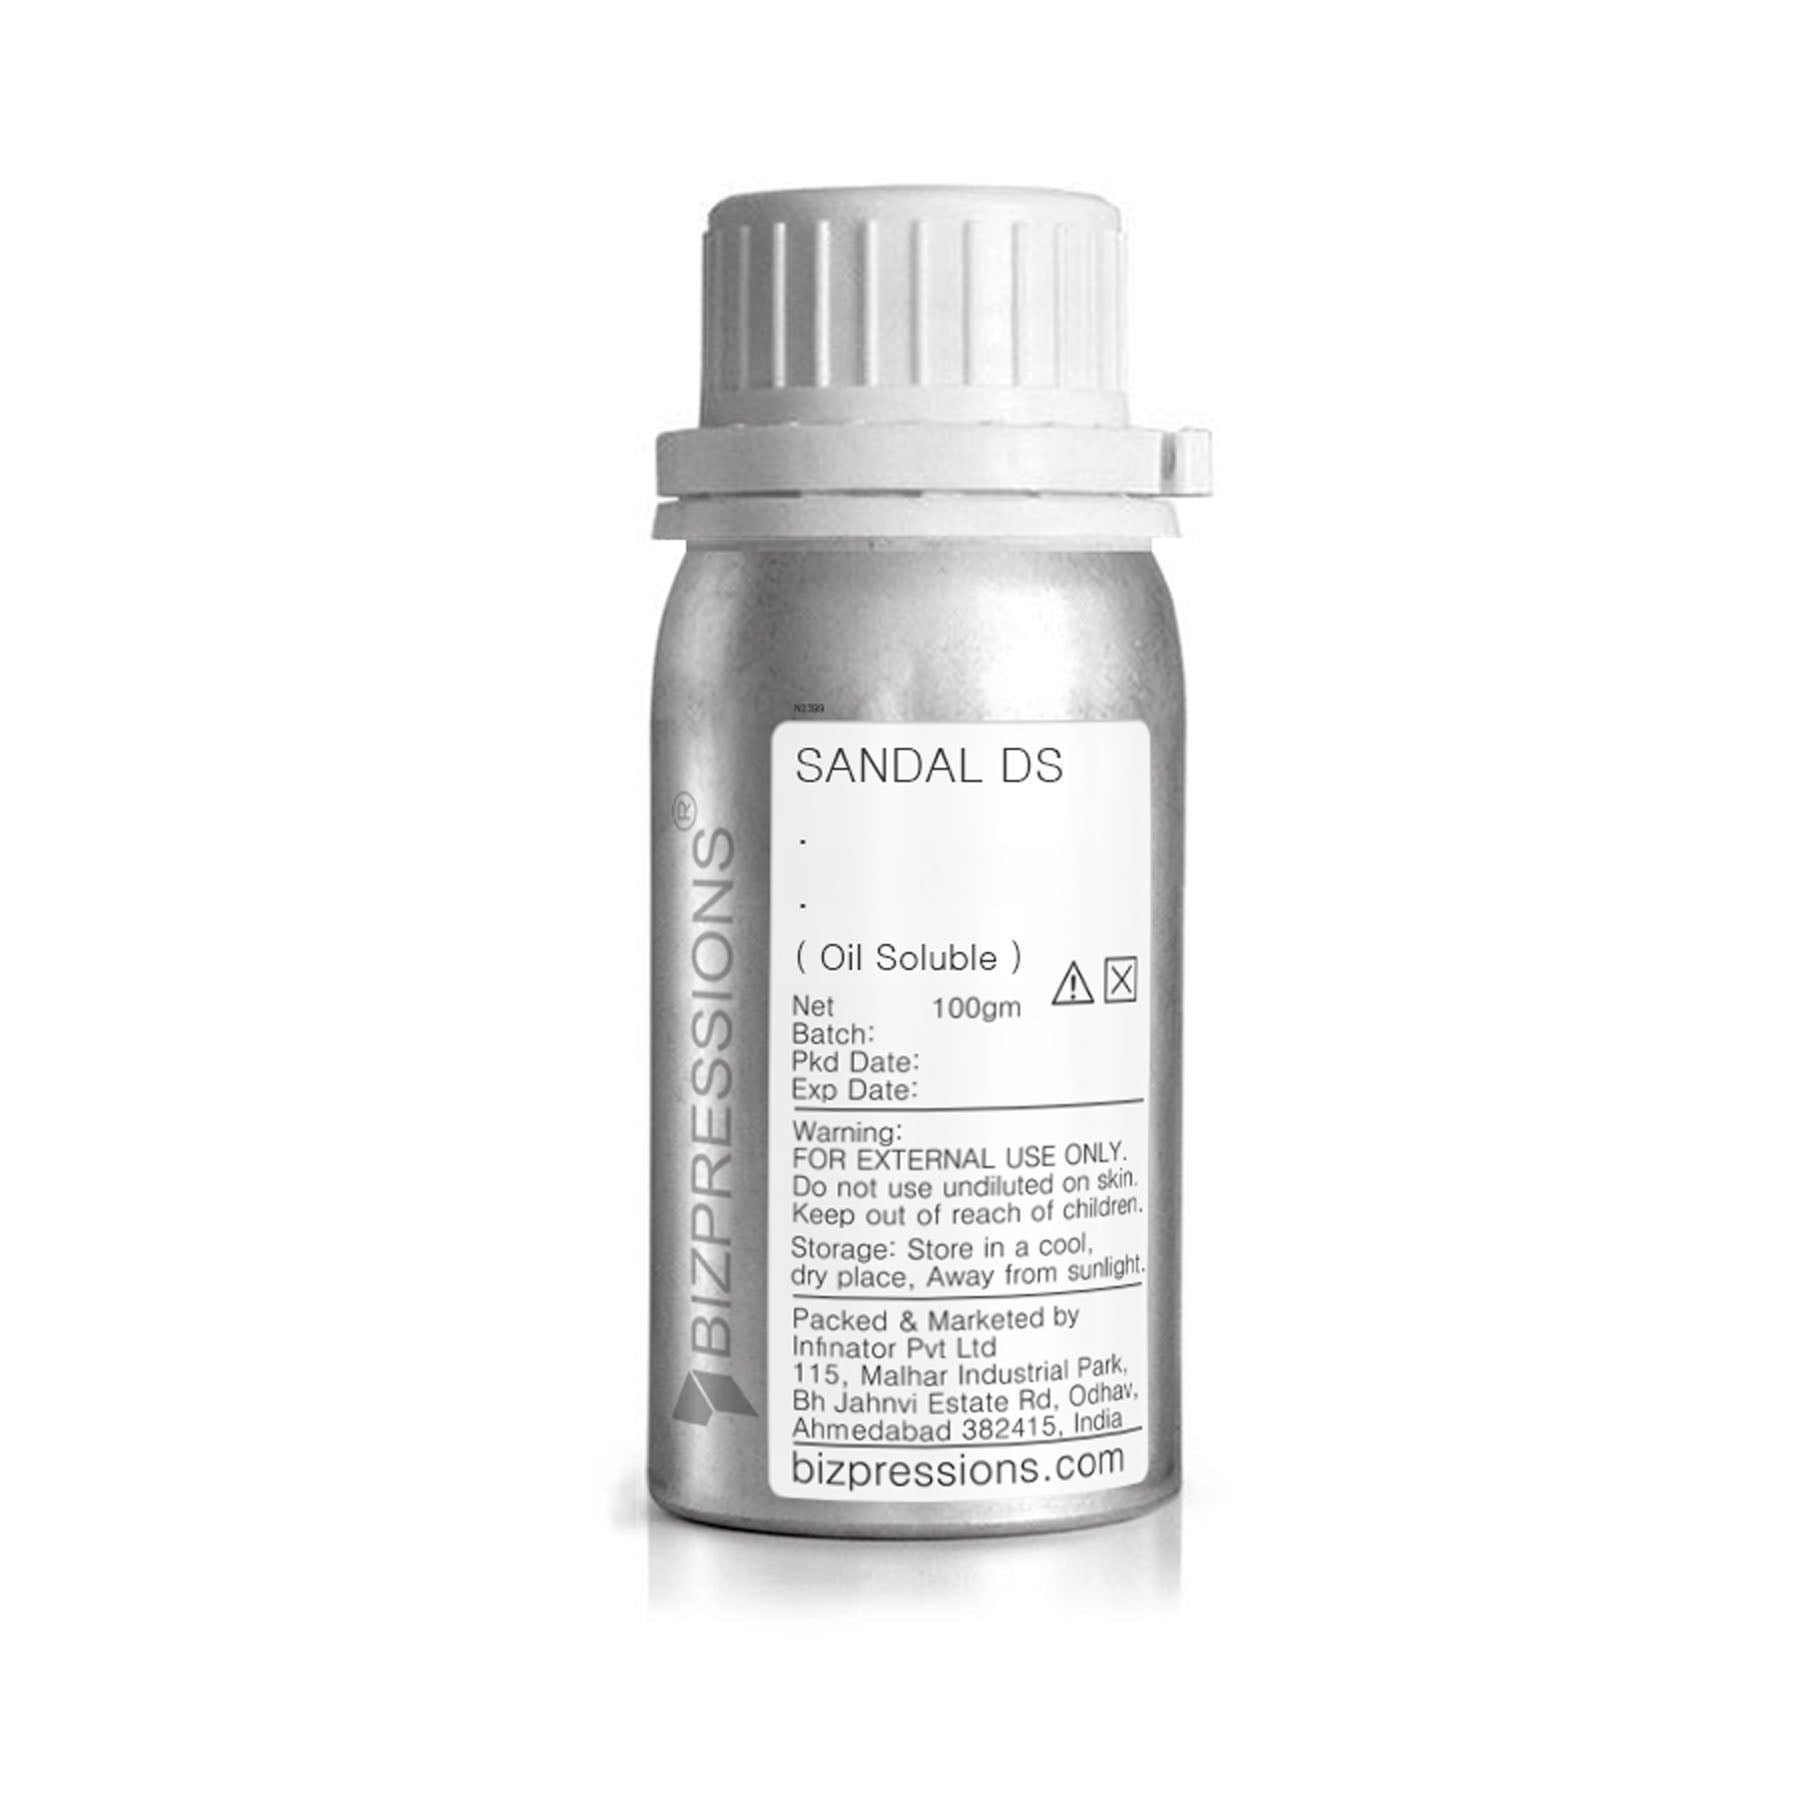 SANDAL DS - Fragrance ( Oil Soluble ) - 100 gm